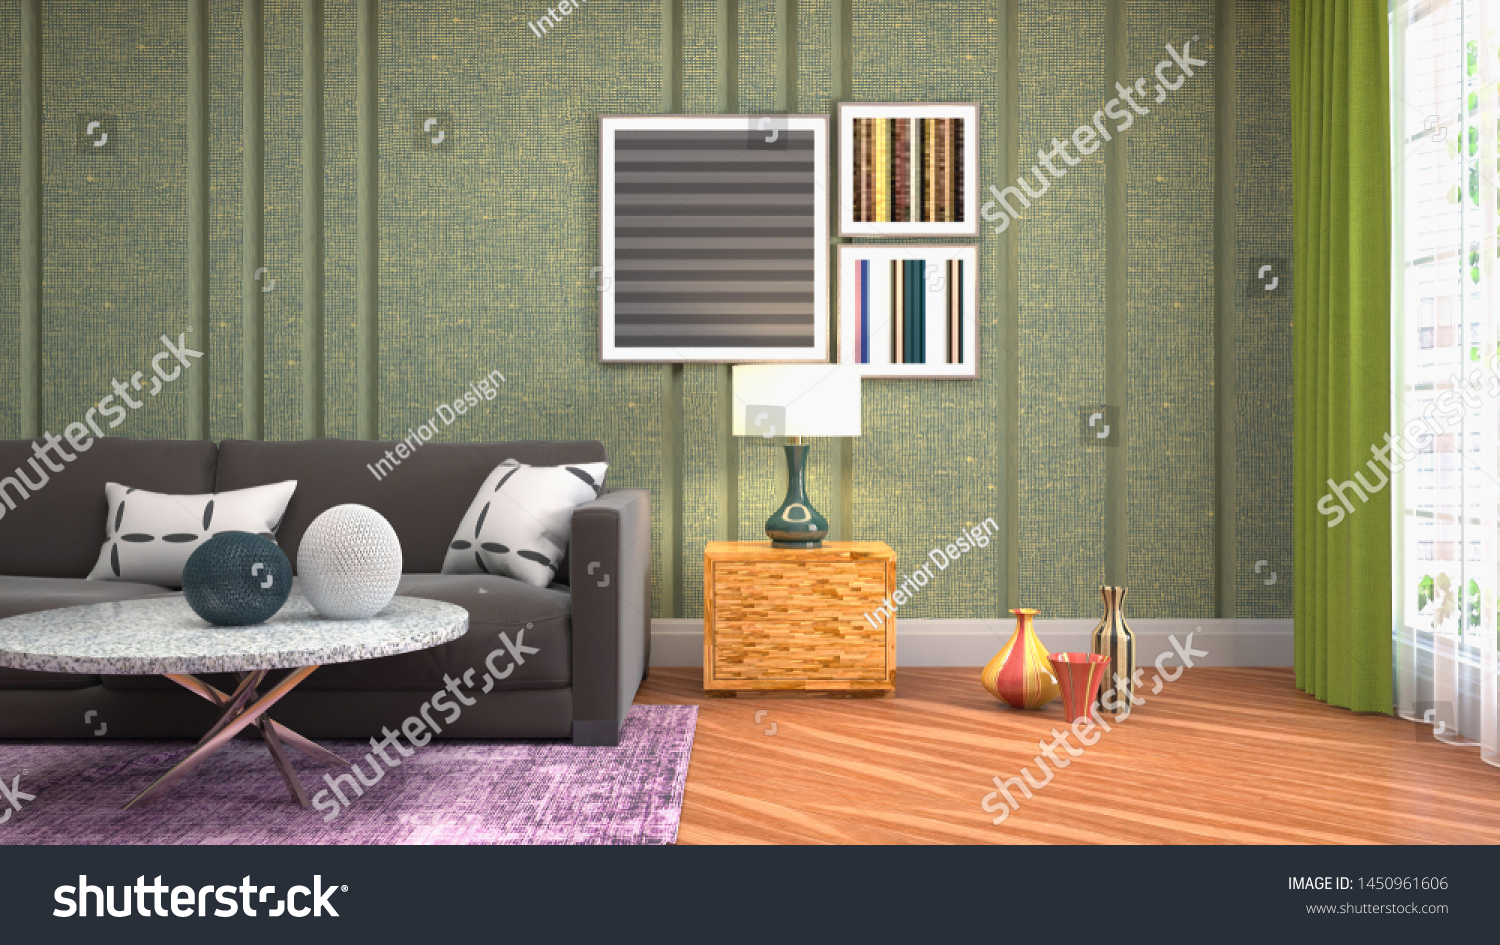 Interior of the living room. 3D illustration. #1450961606